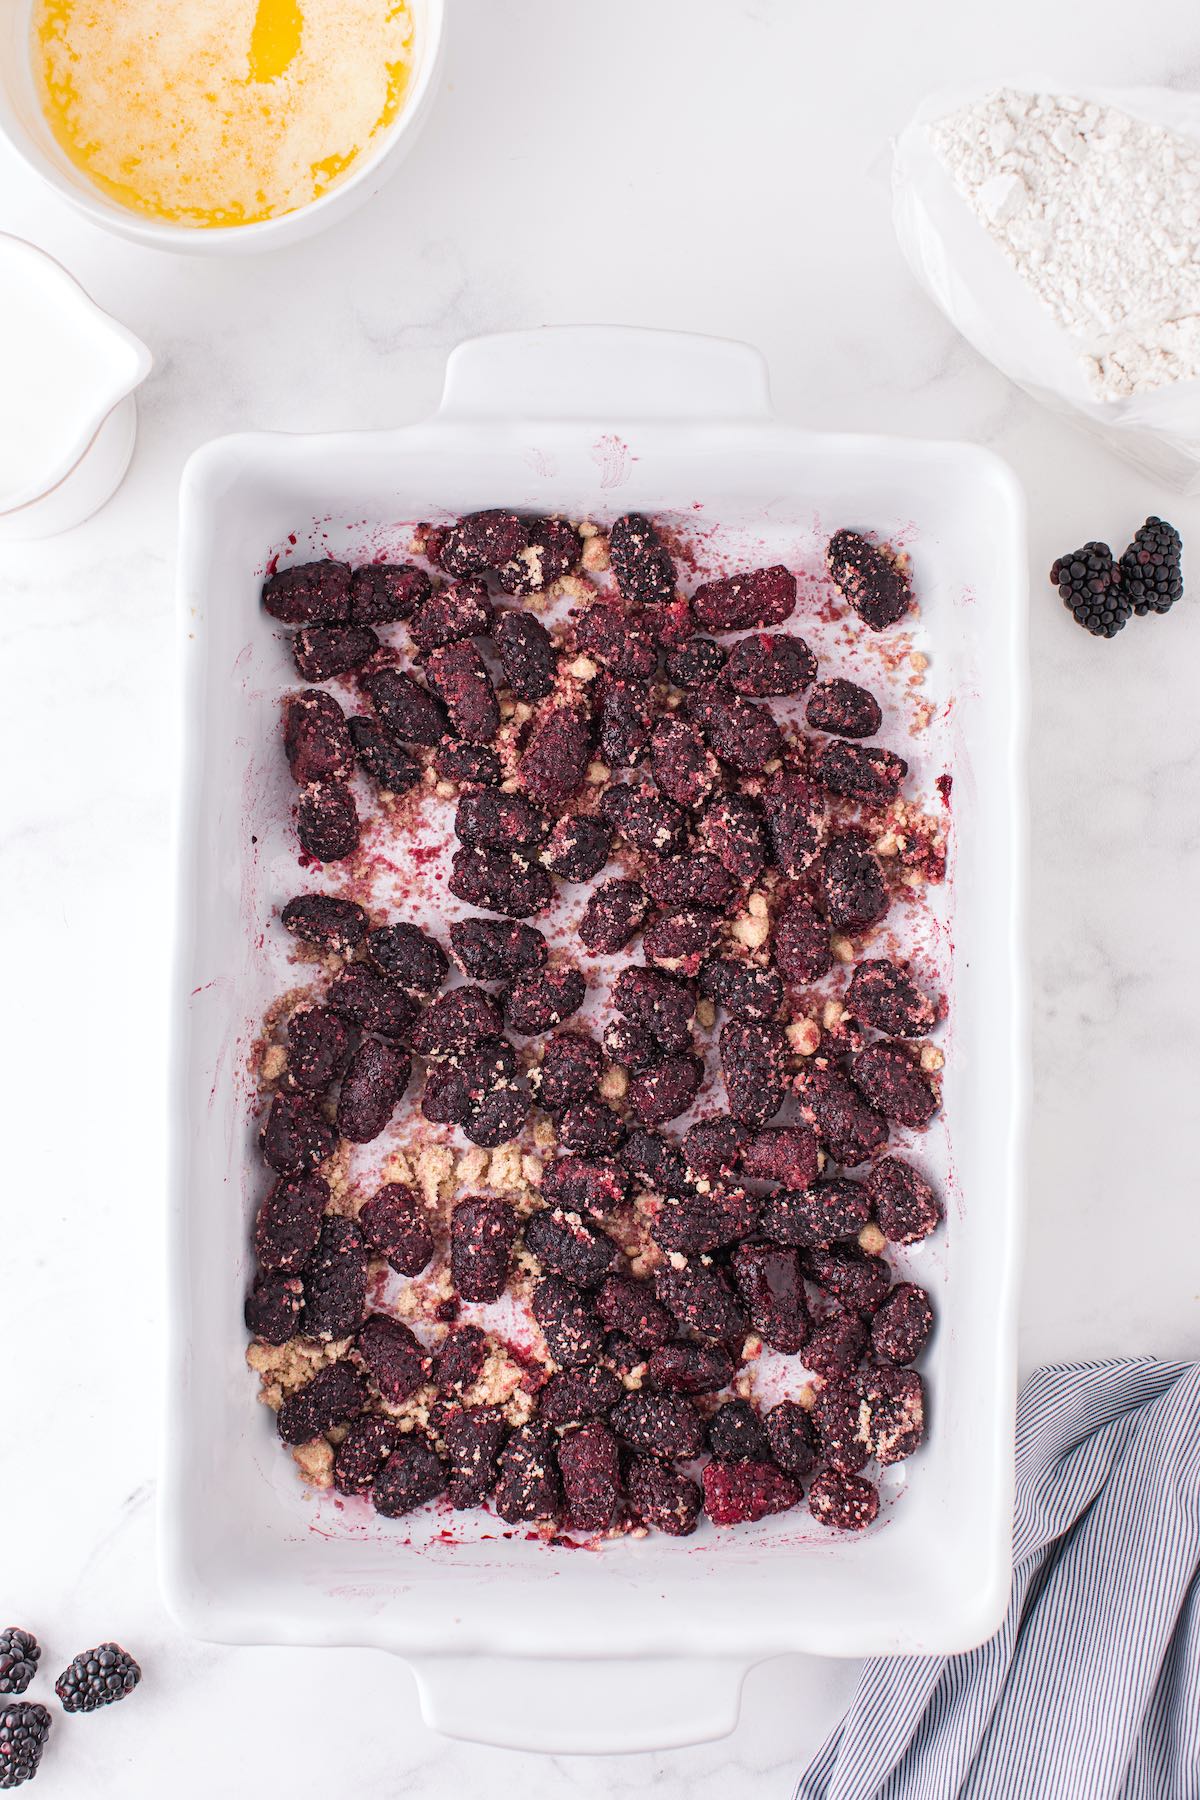 frozen blackberries at the bottom of the baking pan